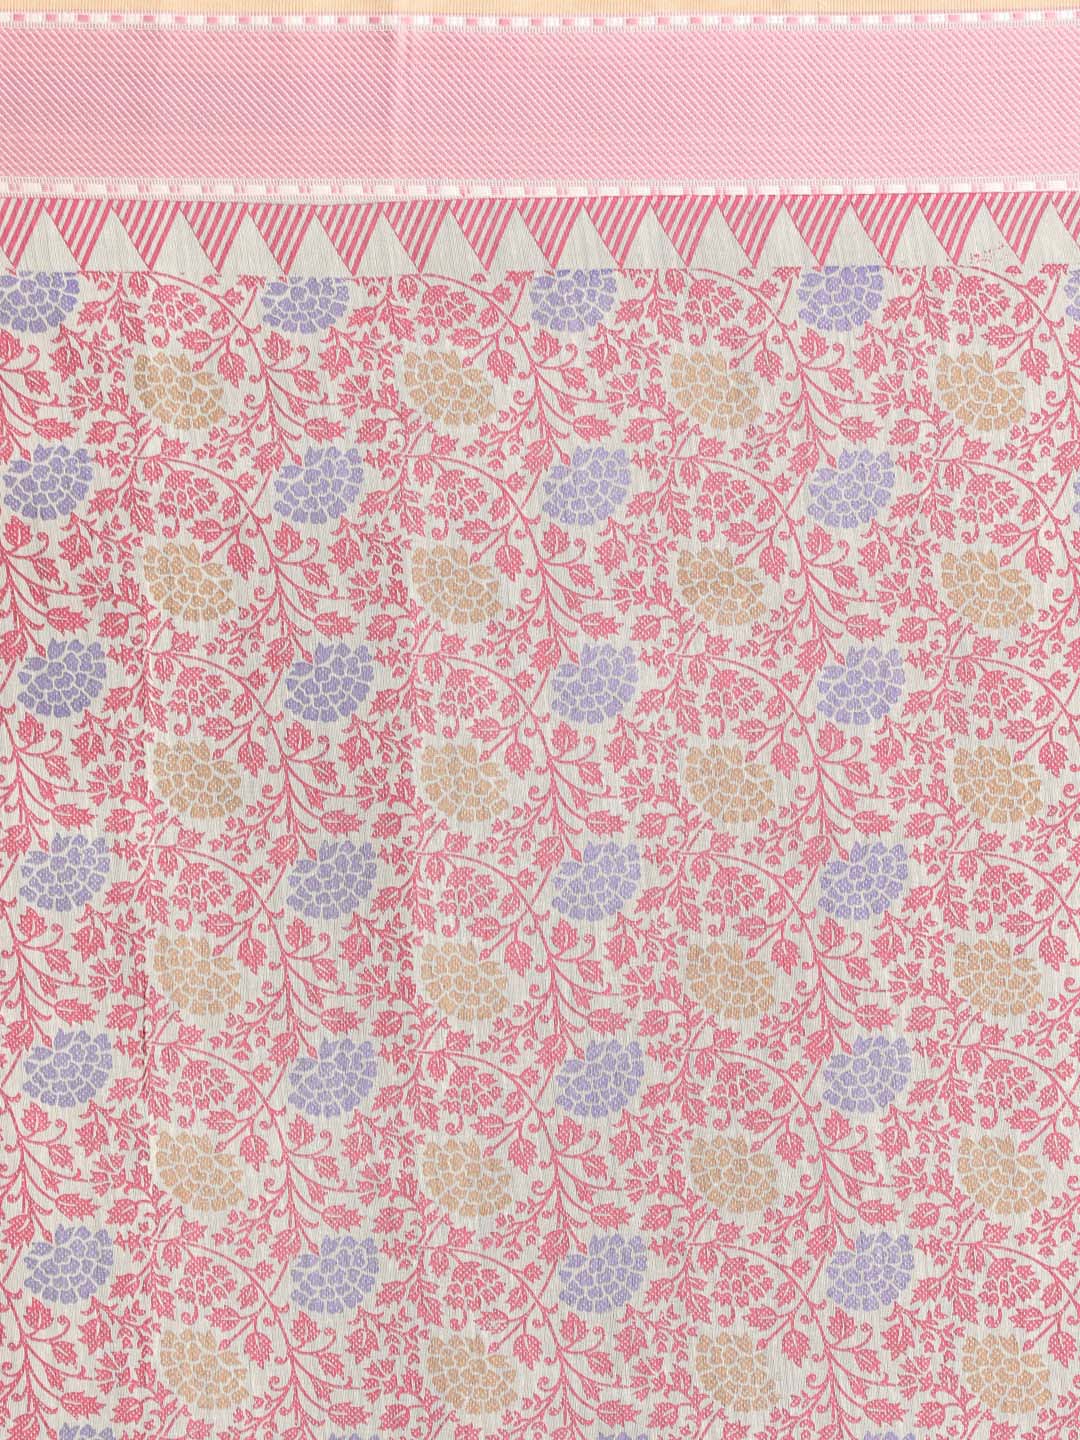 Indethnic Printed Cotton Blend Saree in Pink - Saree Detail View